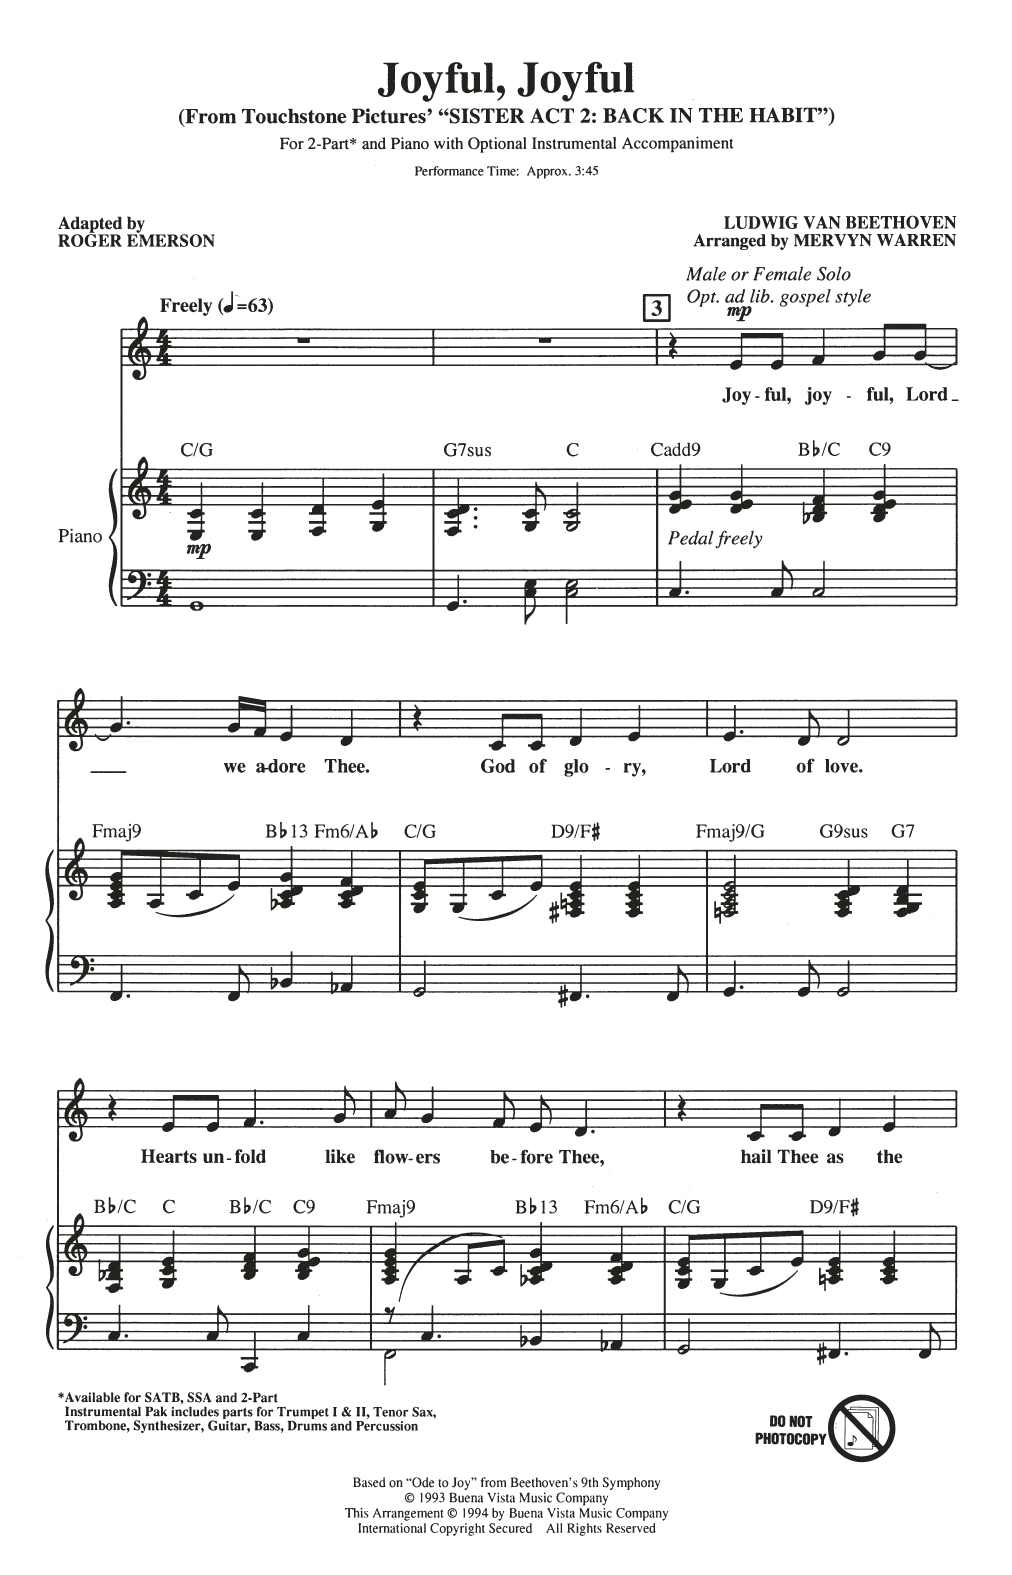 Download Mervyn Warren Joyful, Joyful (from Sister Act 2) (arr. Roger Emerson) Sheet Music and learn how to play SSA Choir PDF digital score in minutes